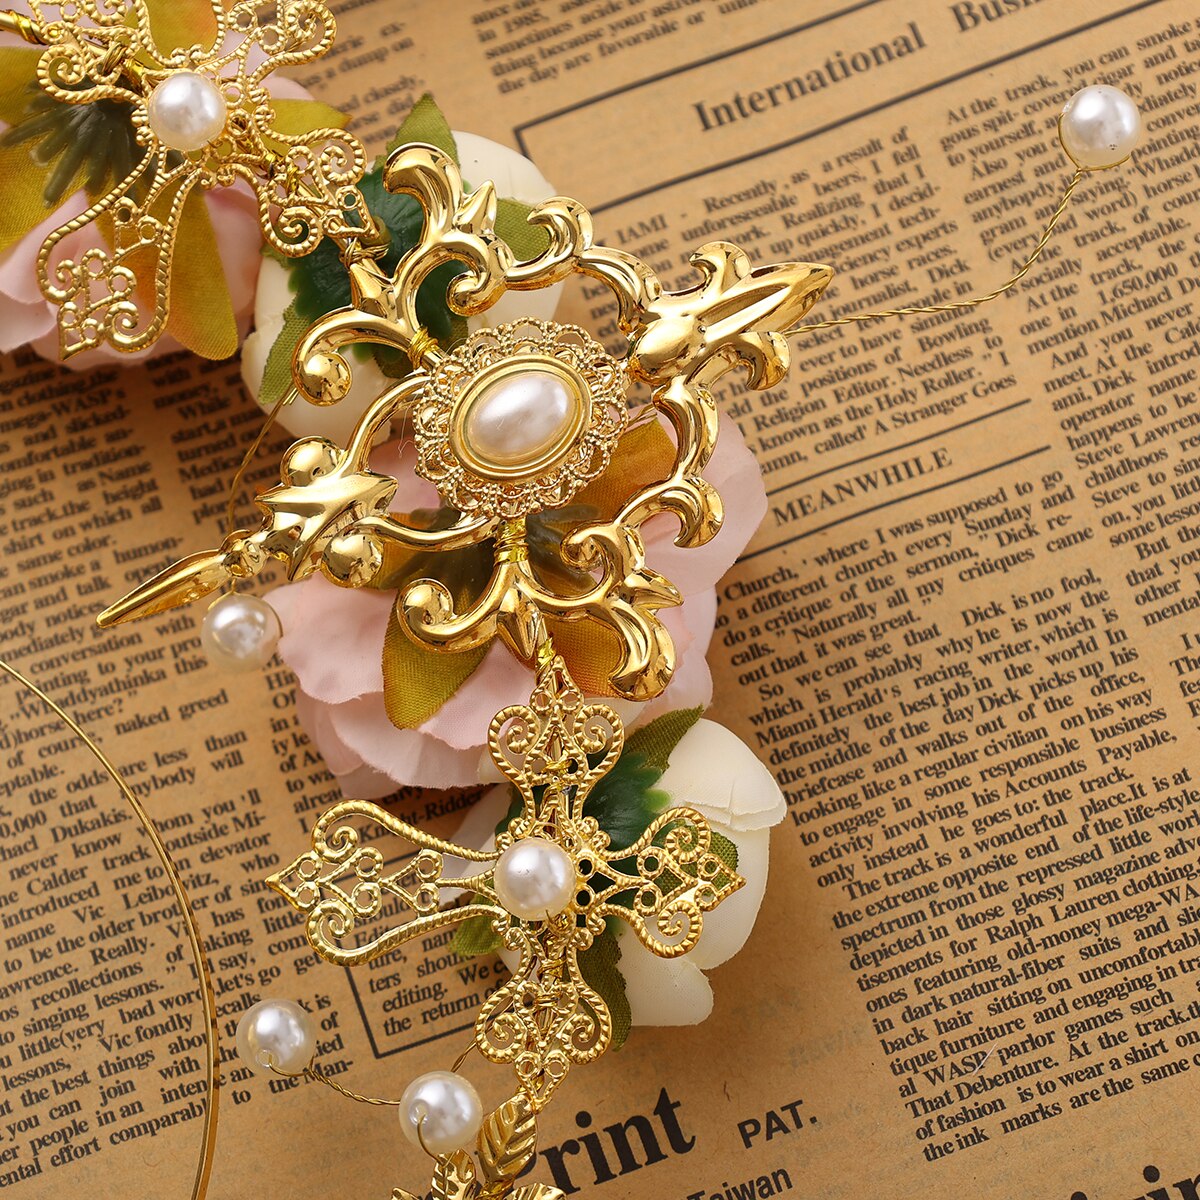 Fairy Princes Rose Crown Headpiece